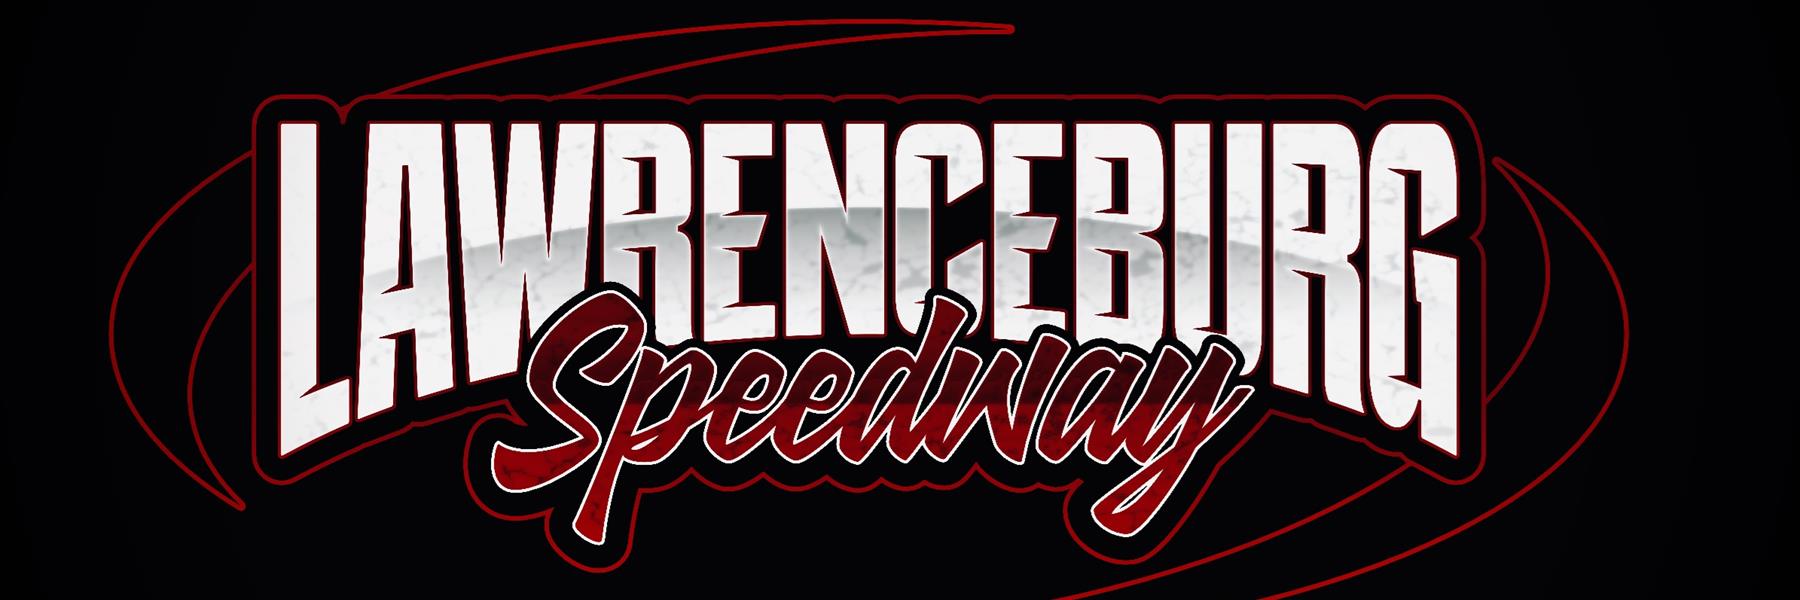 5/29/2023 - Lawrenceburg Speedway